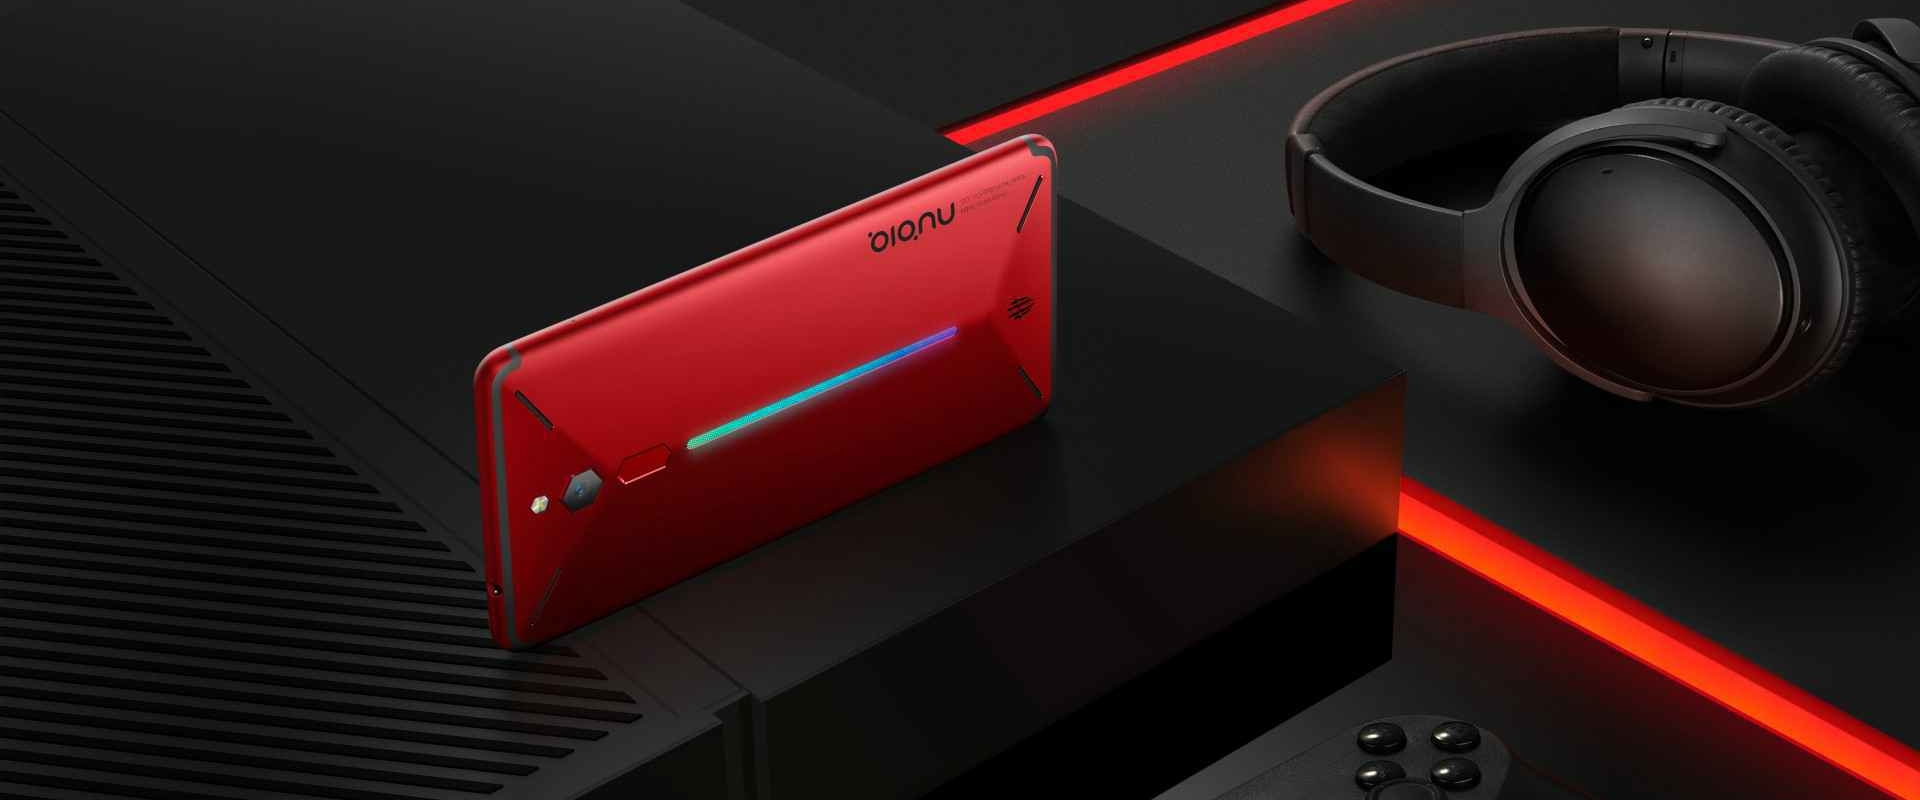 10 GB RAM-mal érkezik a Red Magic 2 gamer telefon